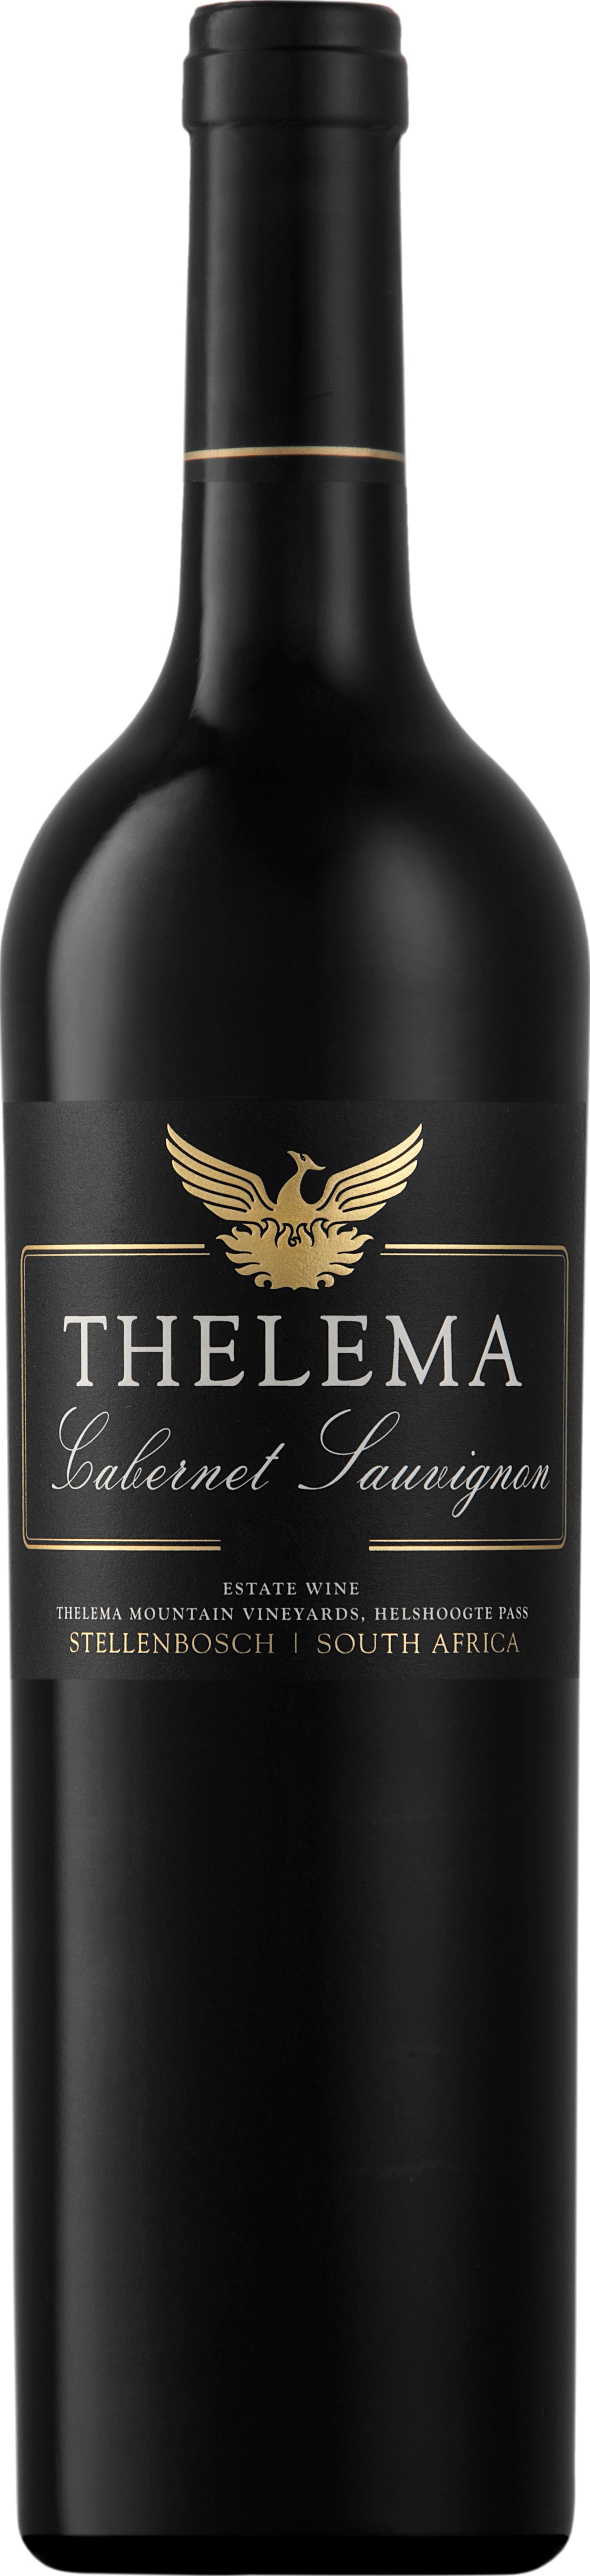 Thelema Mountain Vineyards Cabernet Sauvignon 2020 75cl - Buy Thelema Mountain Vineyards Wines from GREAT WINES DIRECT wine shop